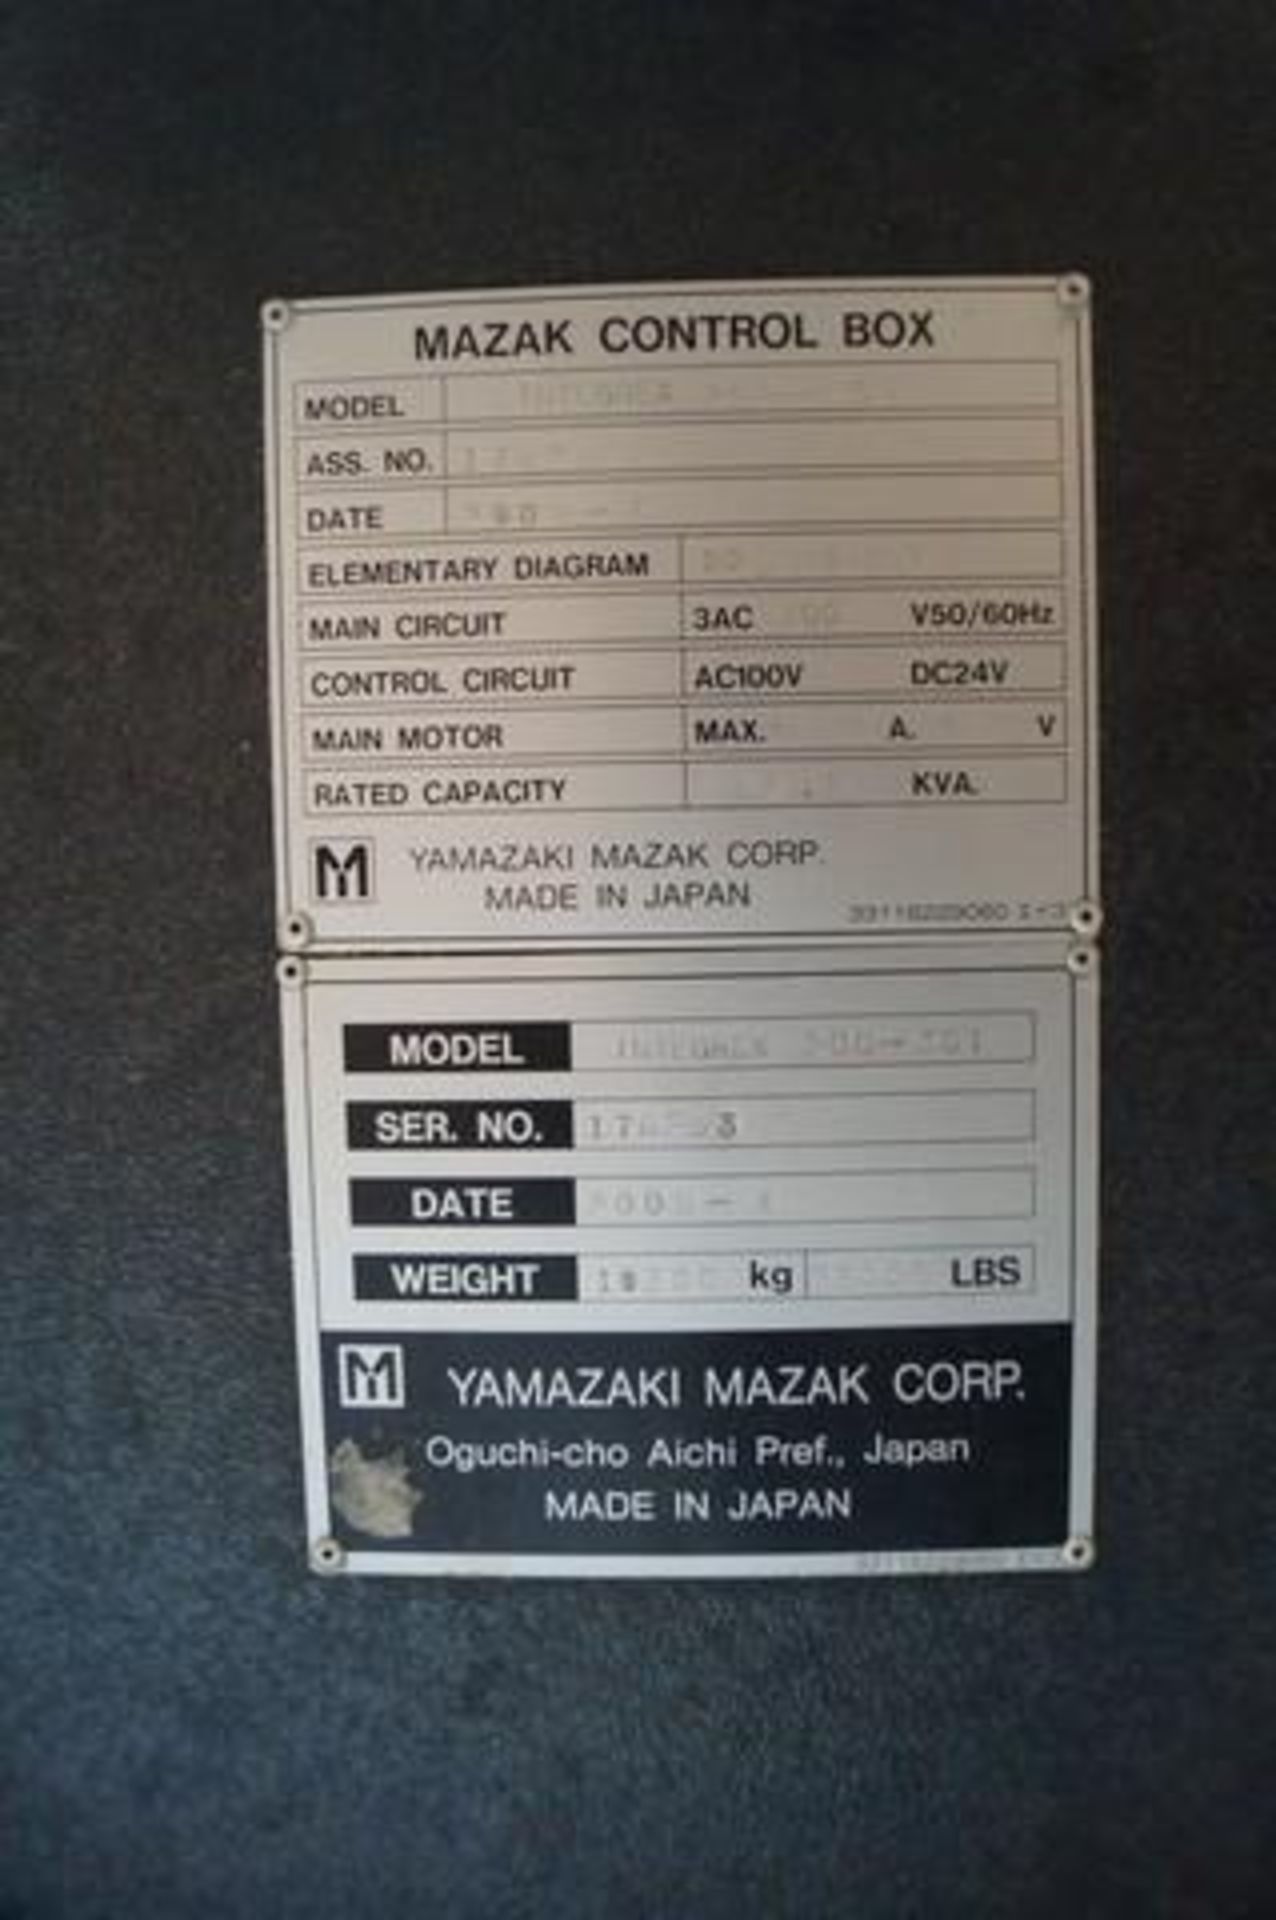 2005 MAZAK INTEGREX 200-3ST Twin Turret CNC Horizontal Turning Center - Image 8 of 8